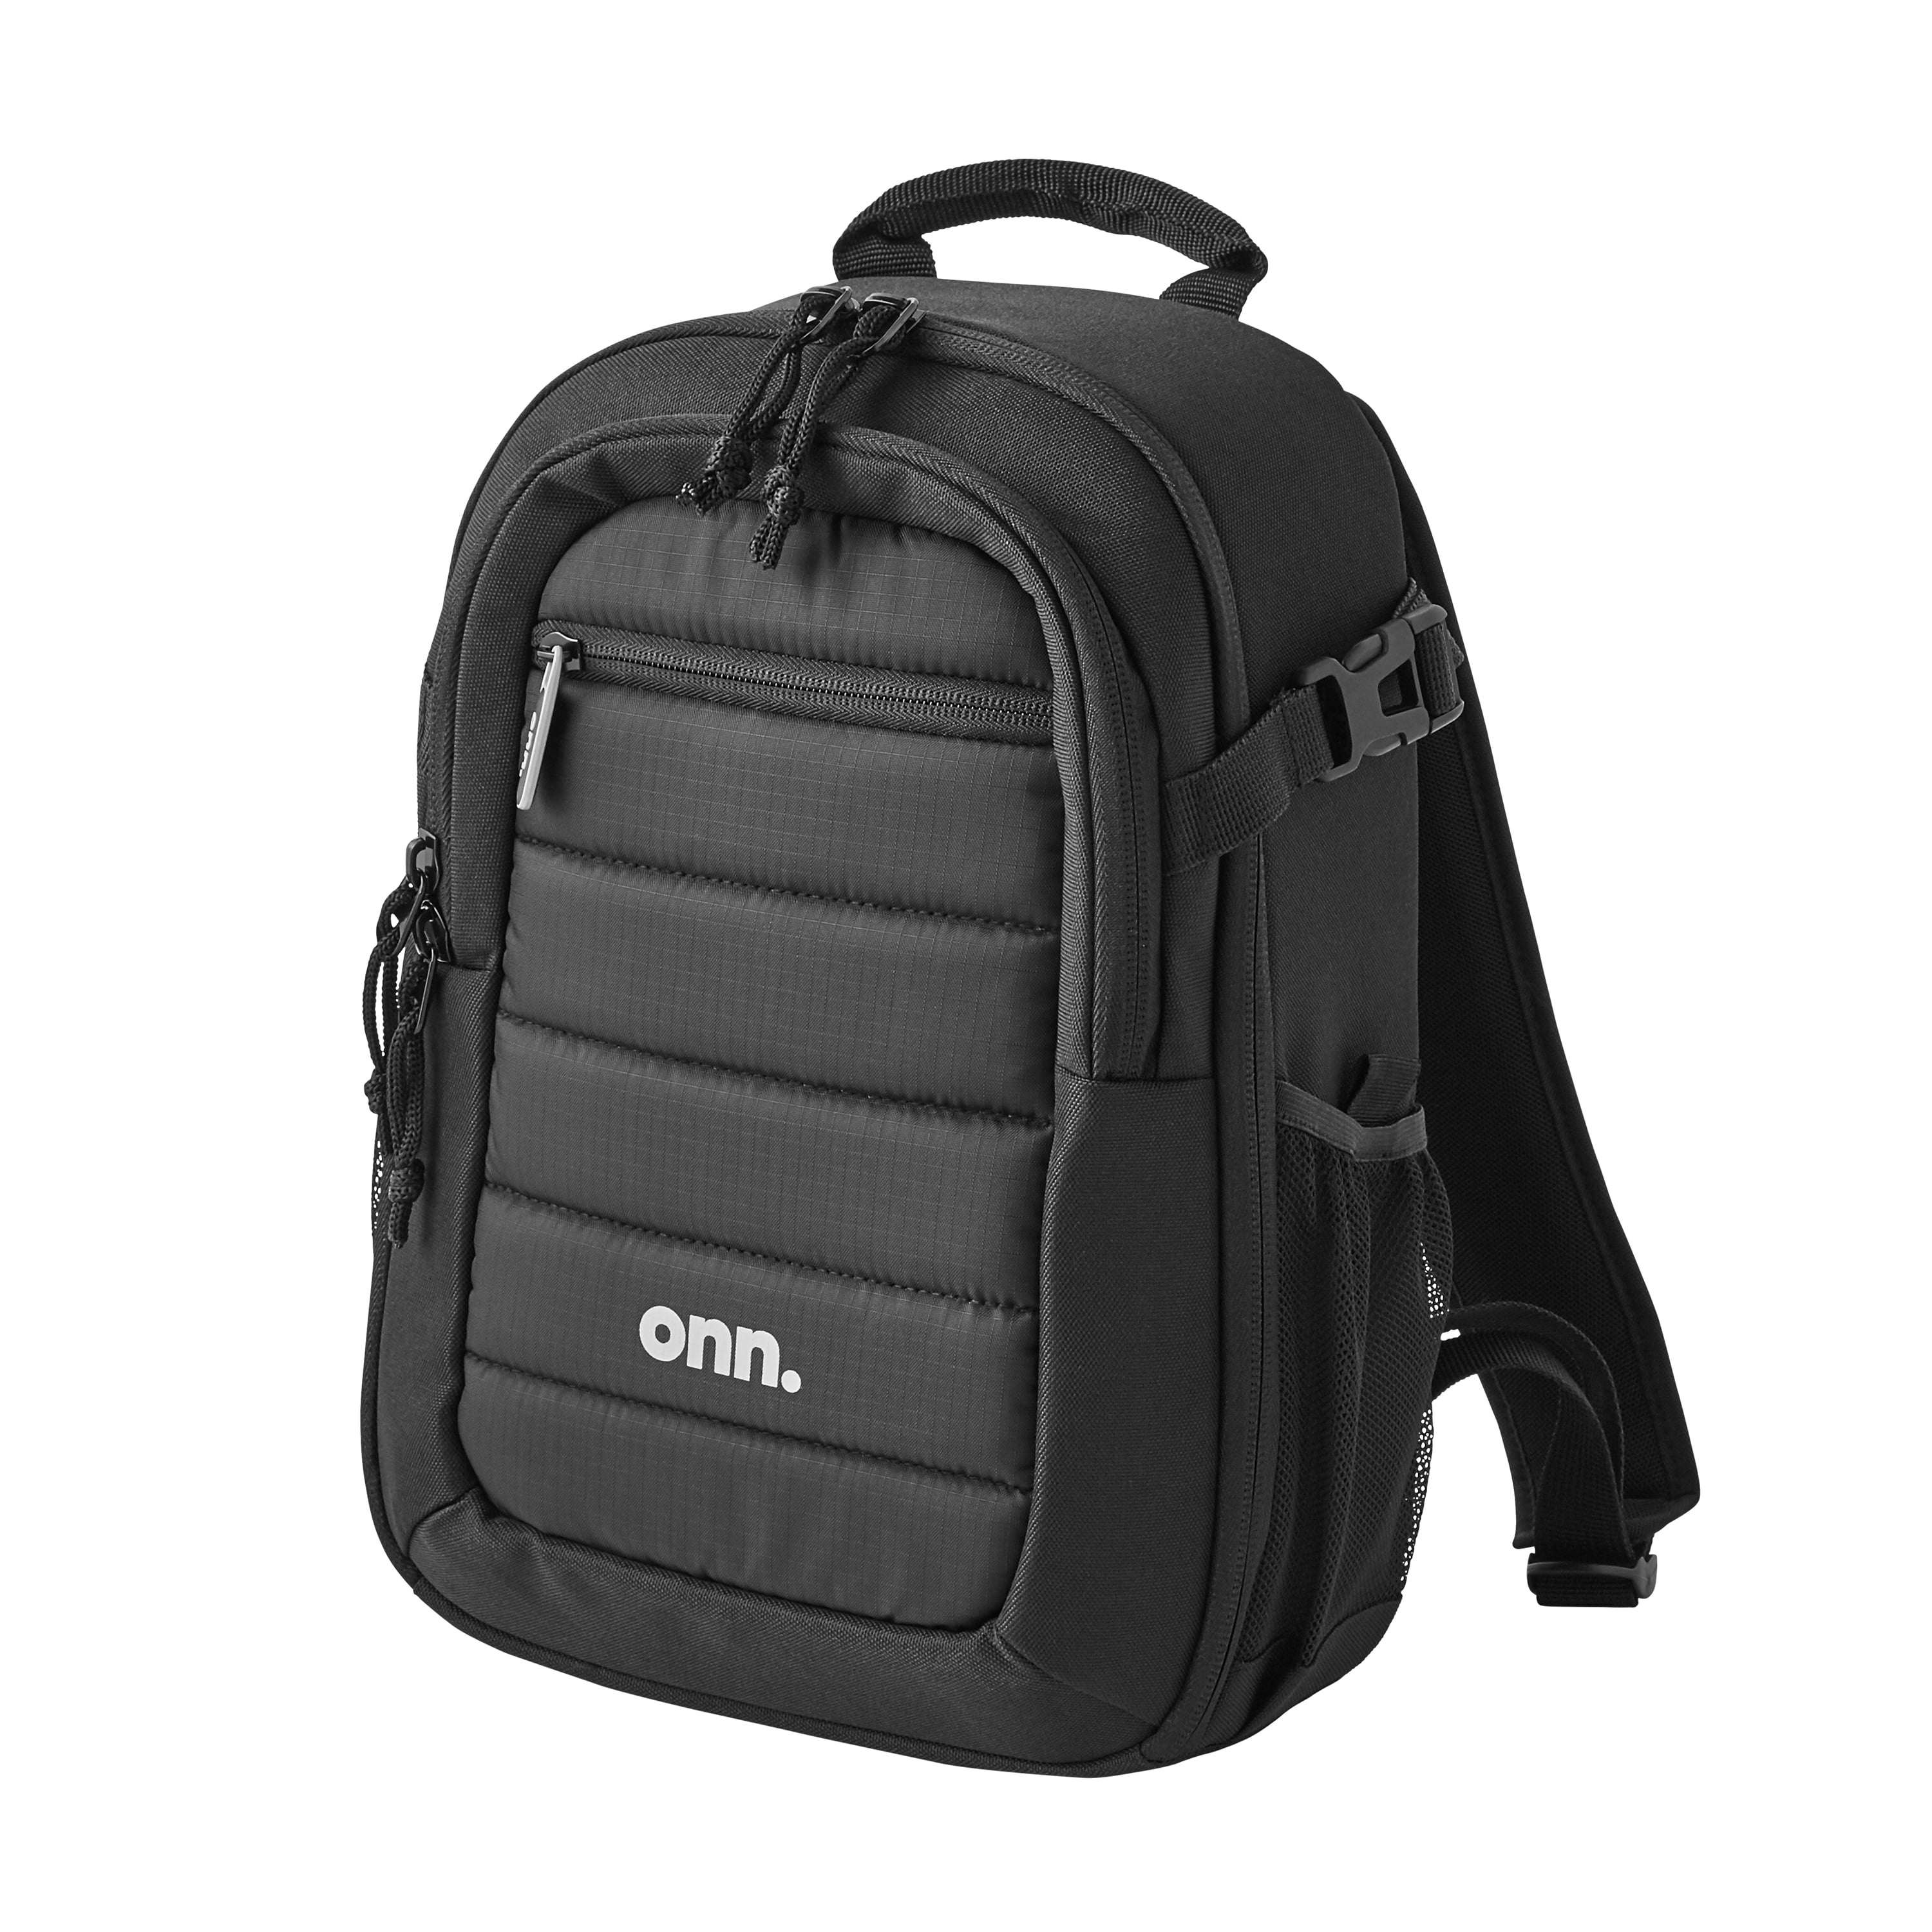 onn. DSLR Camera Carrying Backpack, Water Resistant Digital Camera Bag with Adjustable Pockets